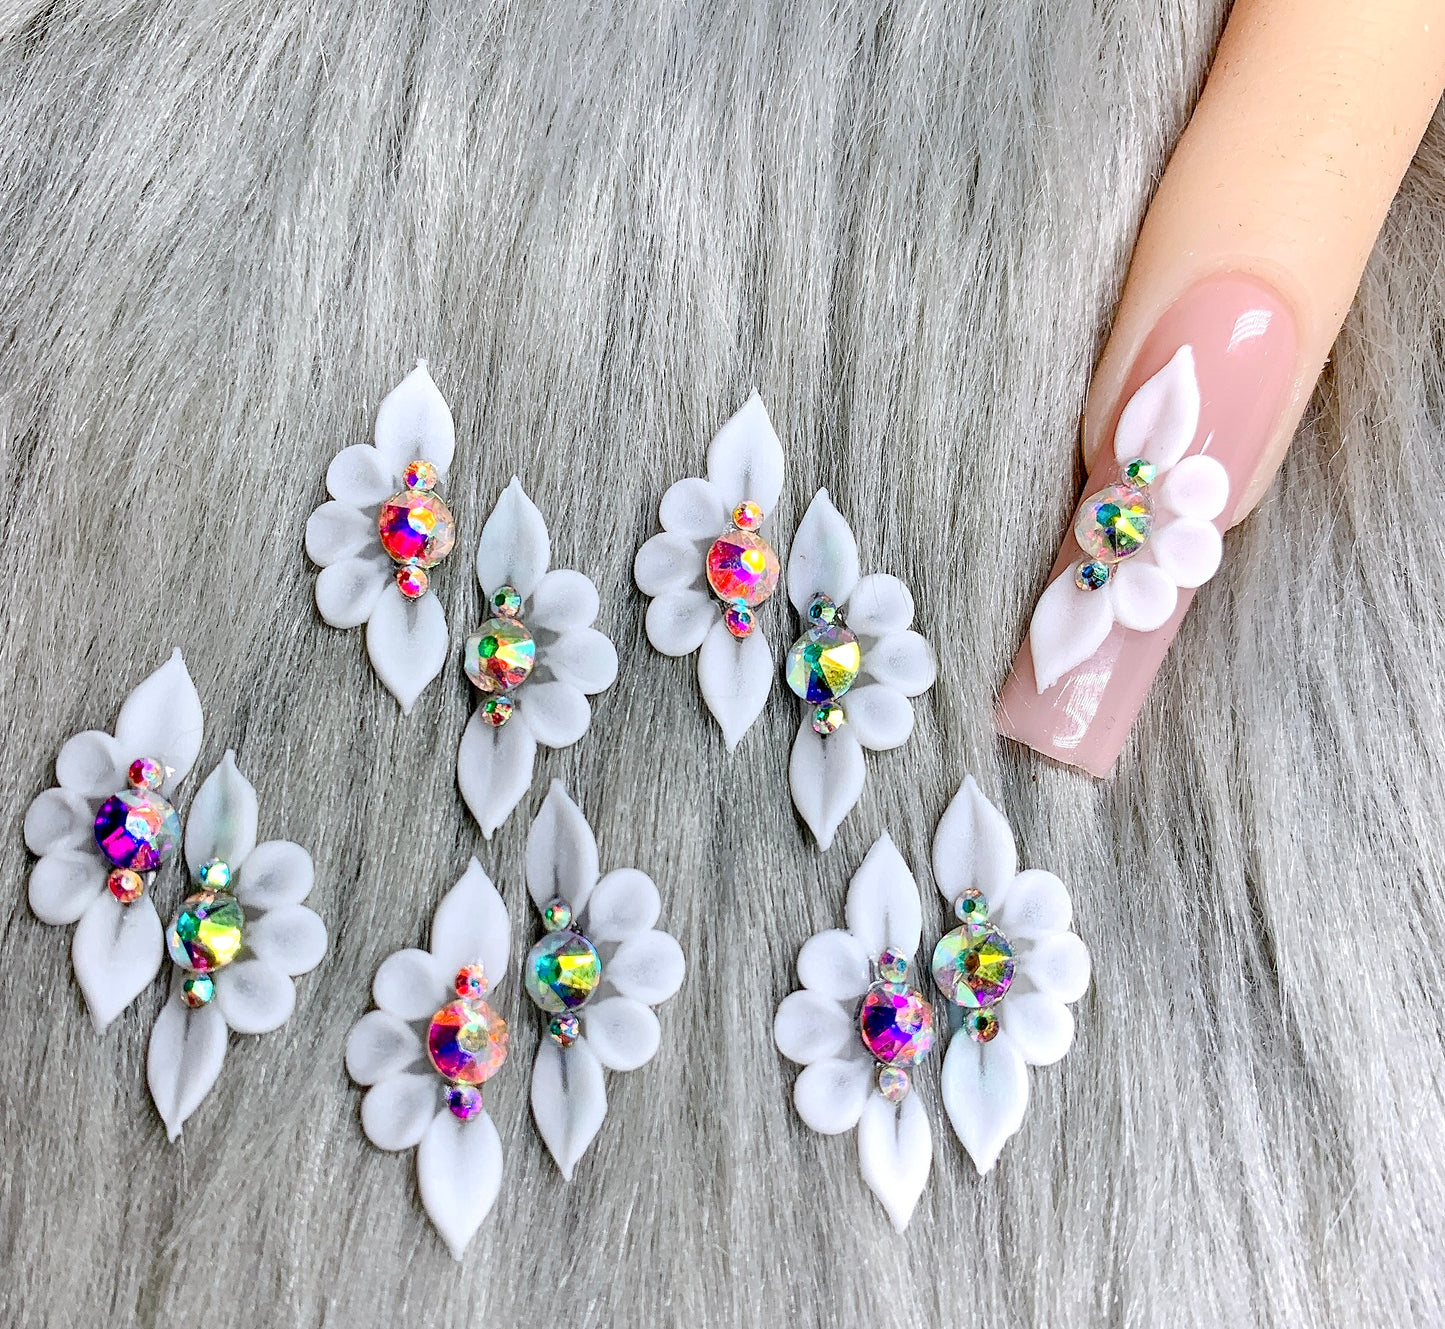 PLAIN HANDMADE 3D WHITE Acrylic Flowers XL Petal nail charms – Tulip Real  Deal